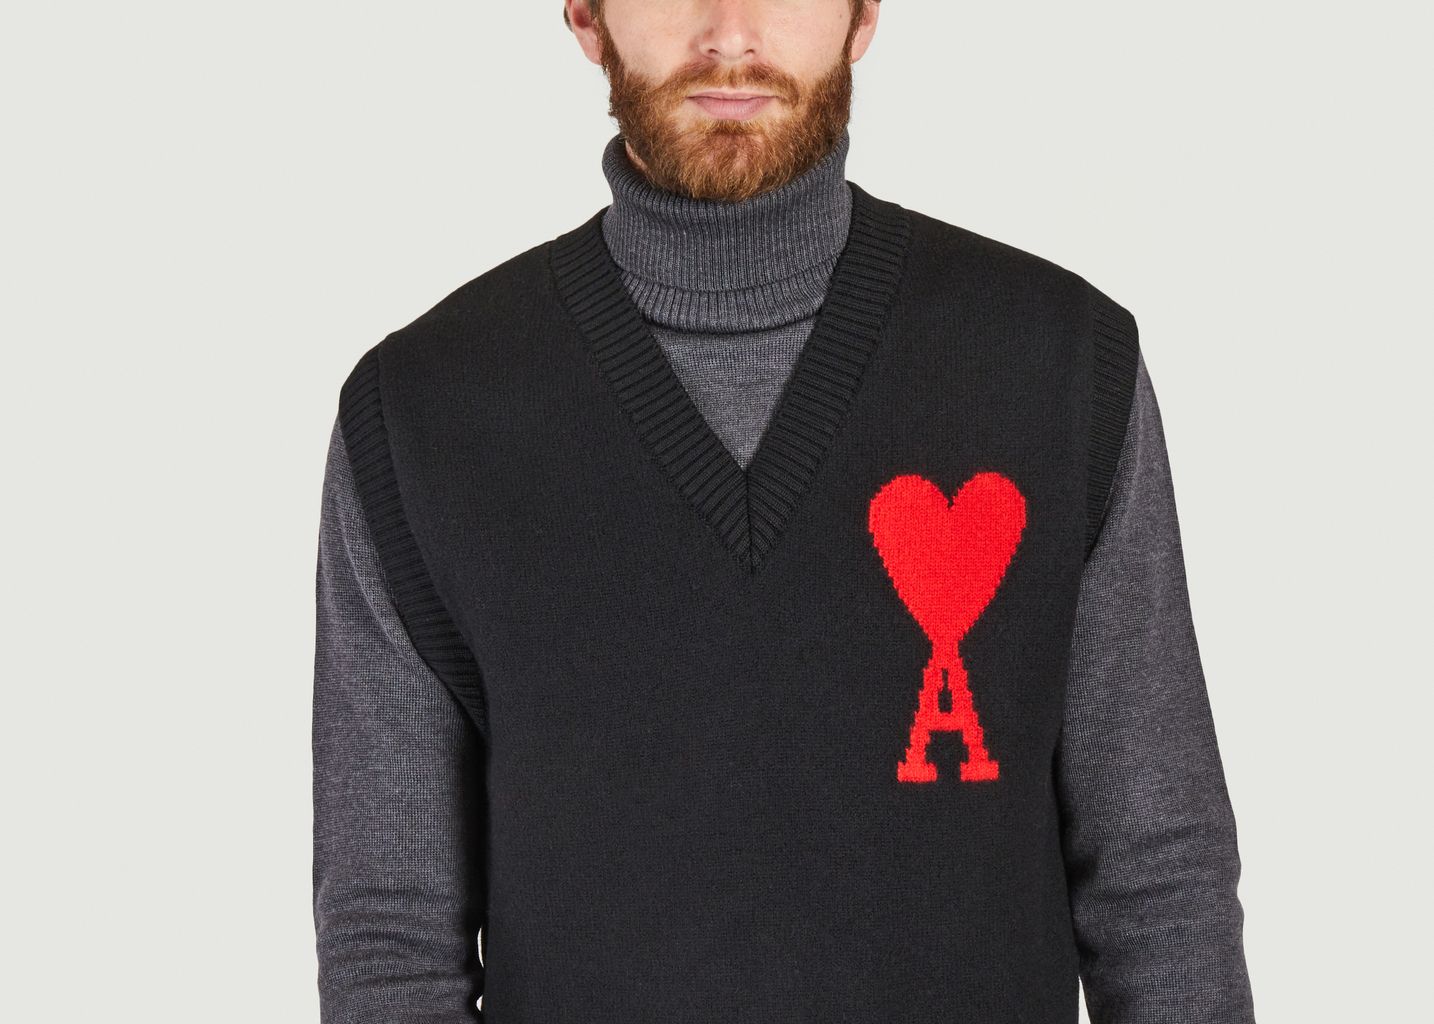 Merino sleeveless sweater - AMI Paris